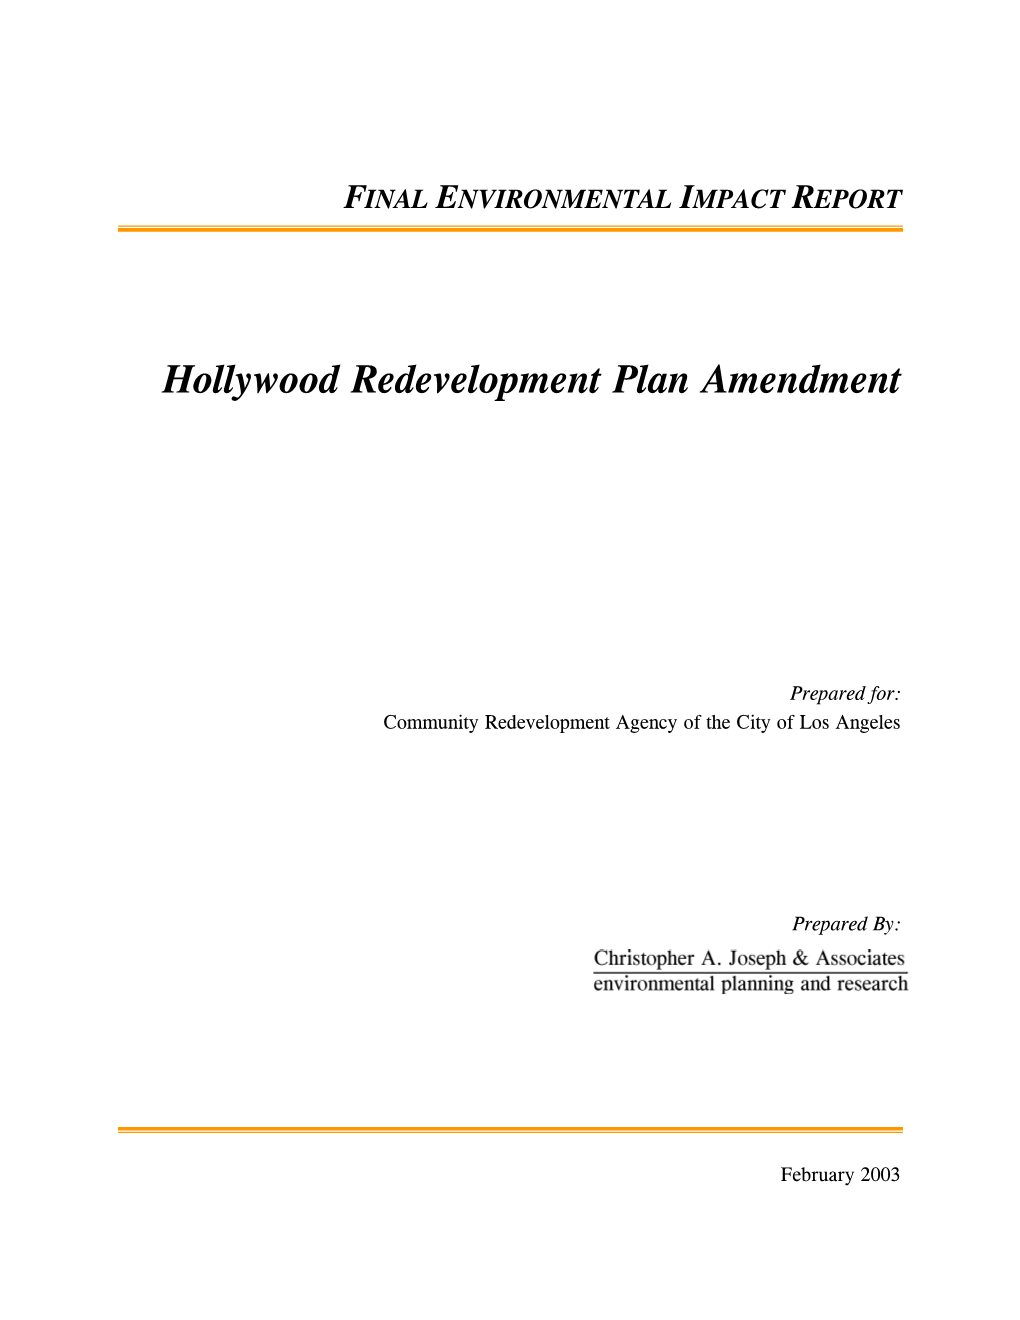 Hollywood Plan Amendment Final EIR 1